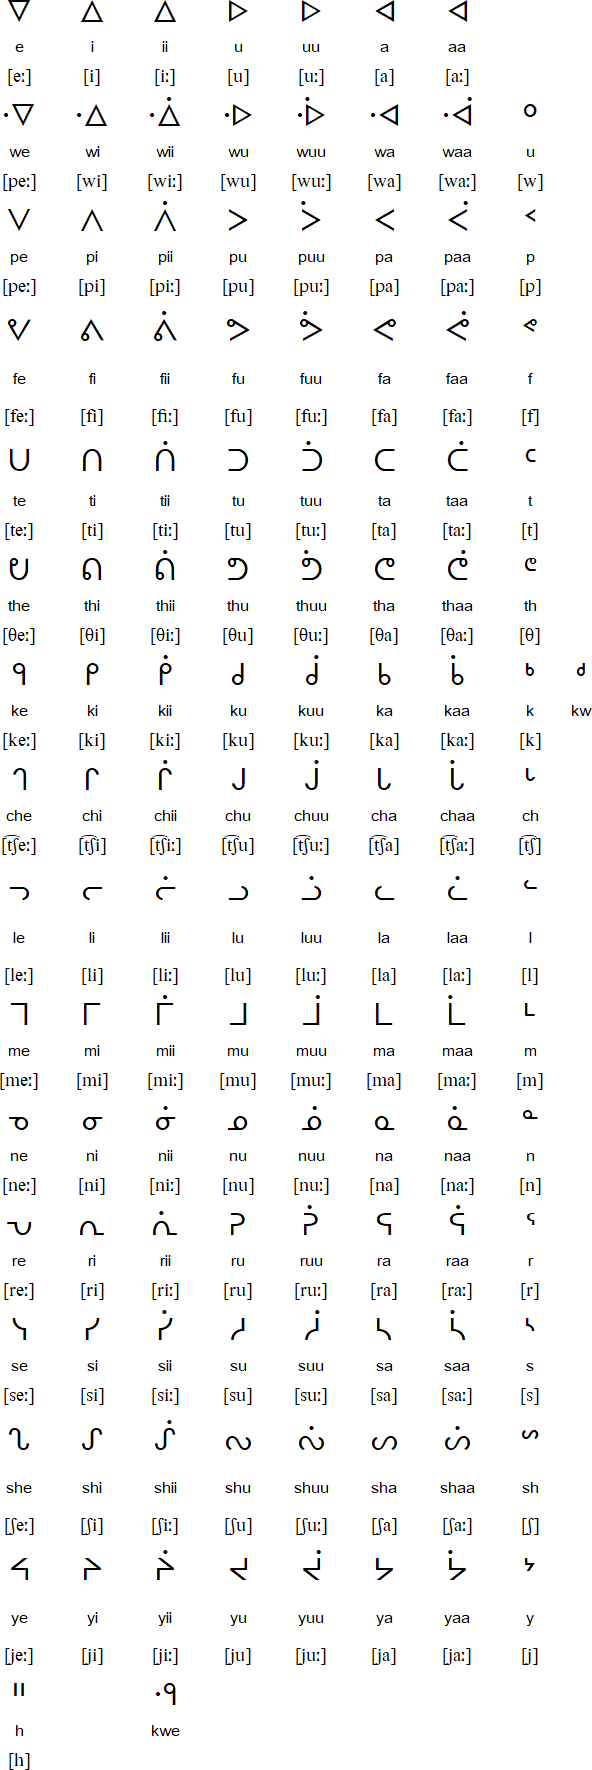 Cree Syllabics Chart